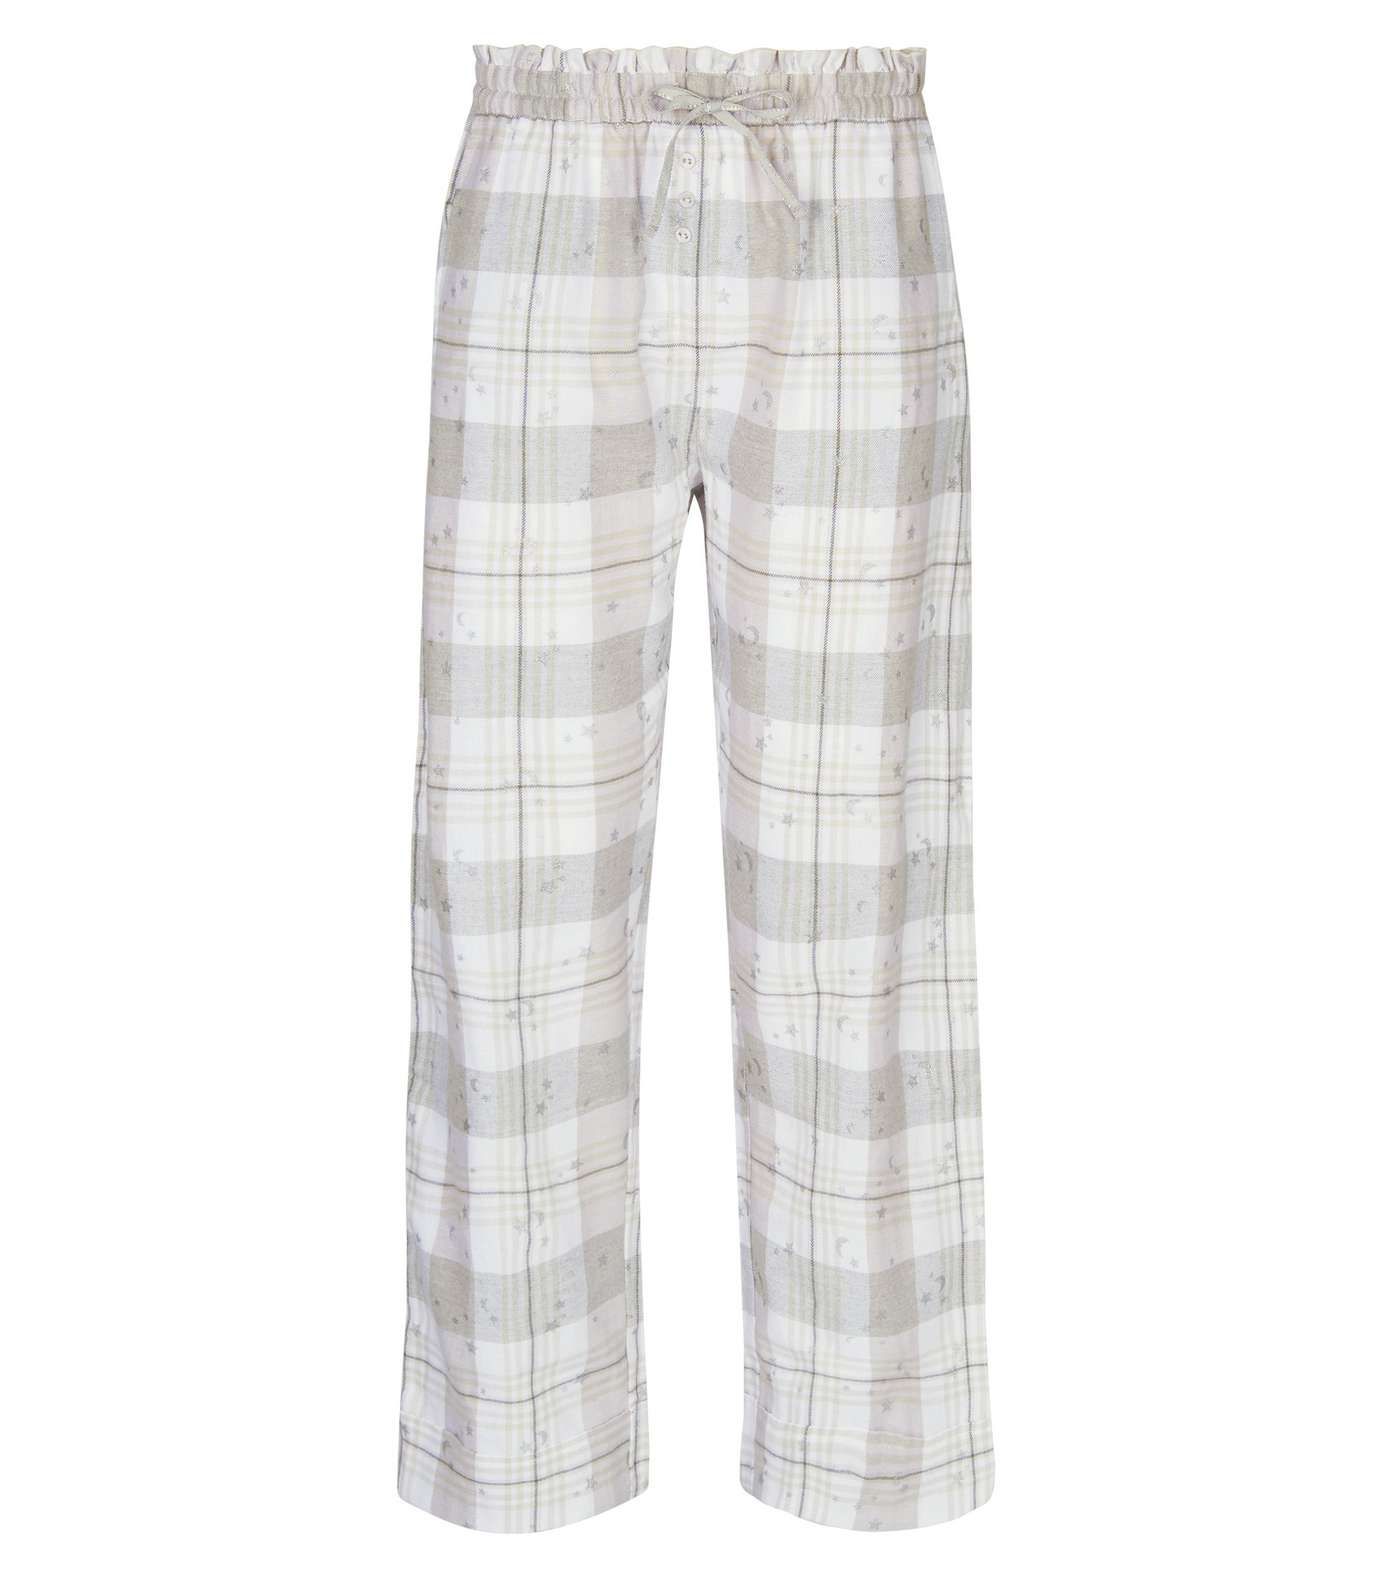 Grey Check Glitter Star Print Pyjama Bottoms Image 4